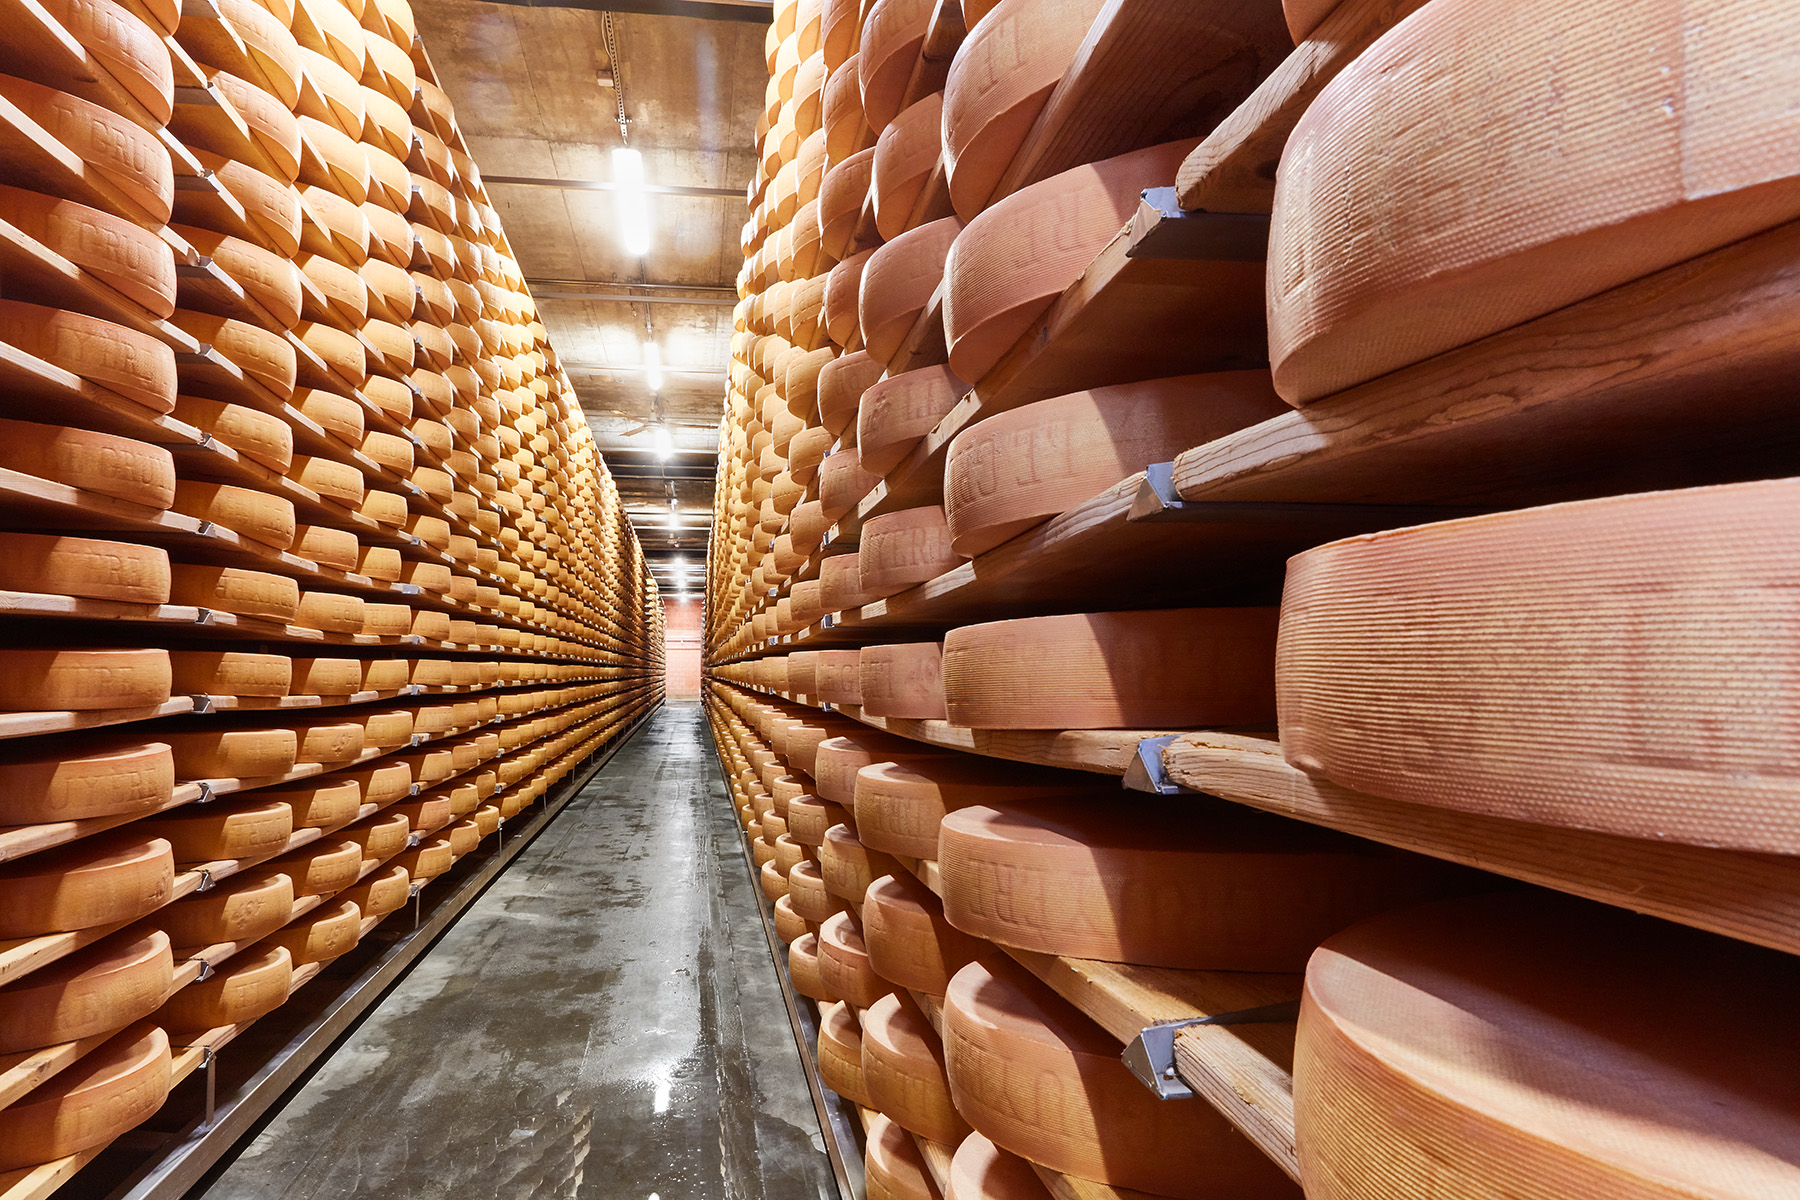 Le Gruyère Aop Album Cheese Tradition Swiss 